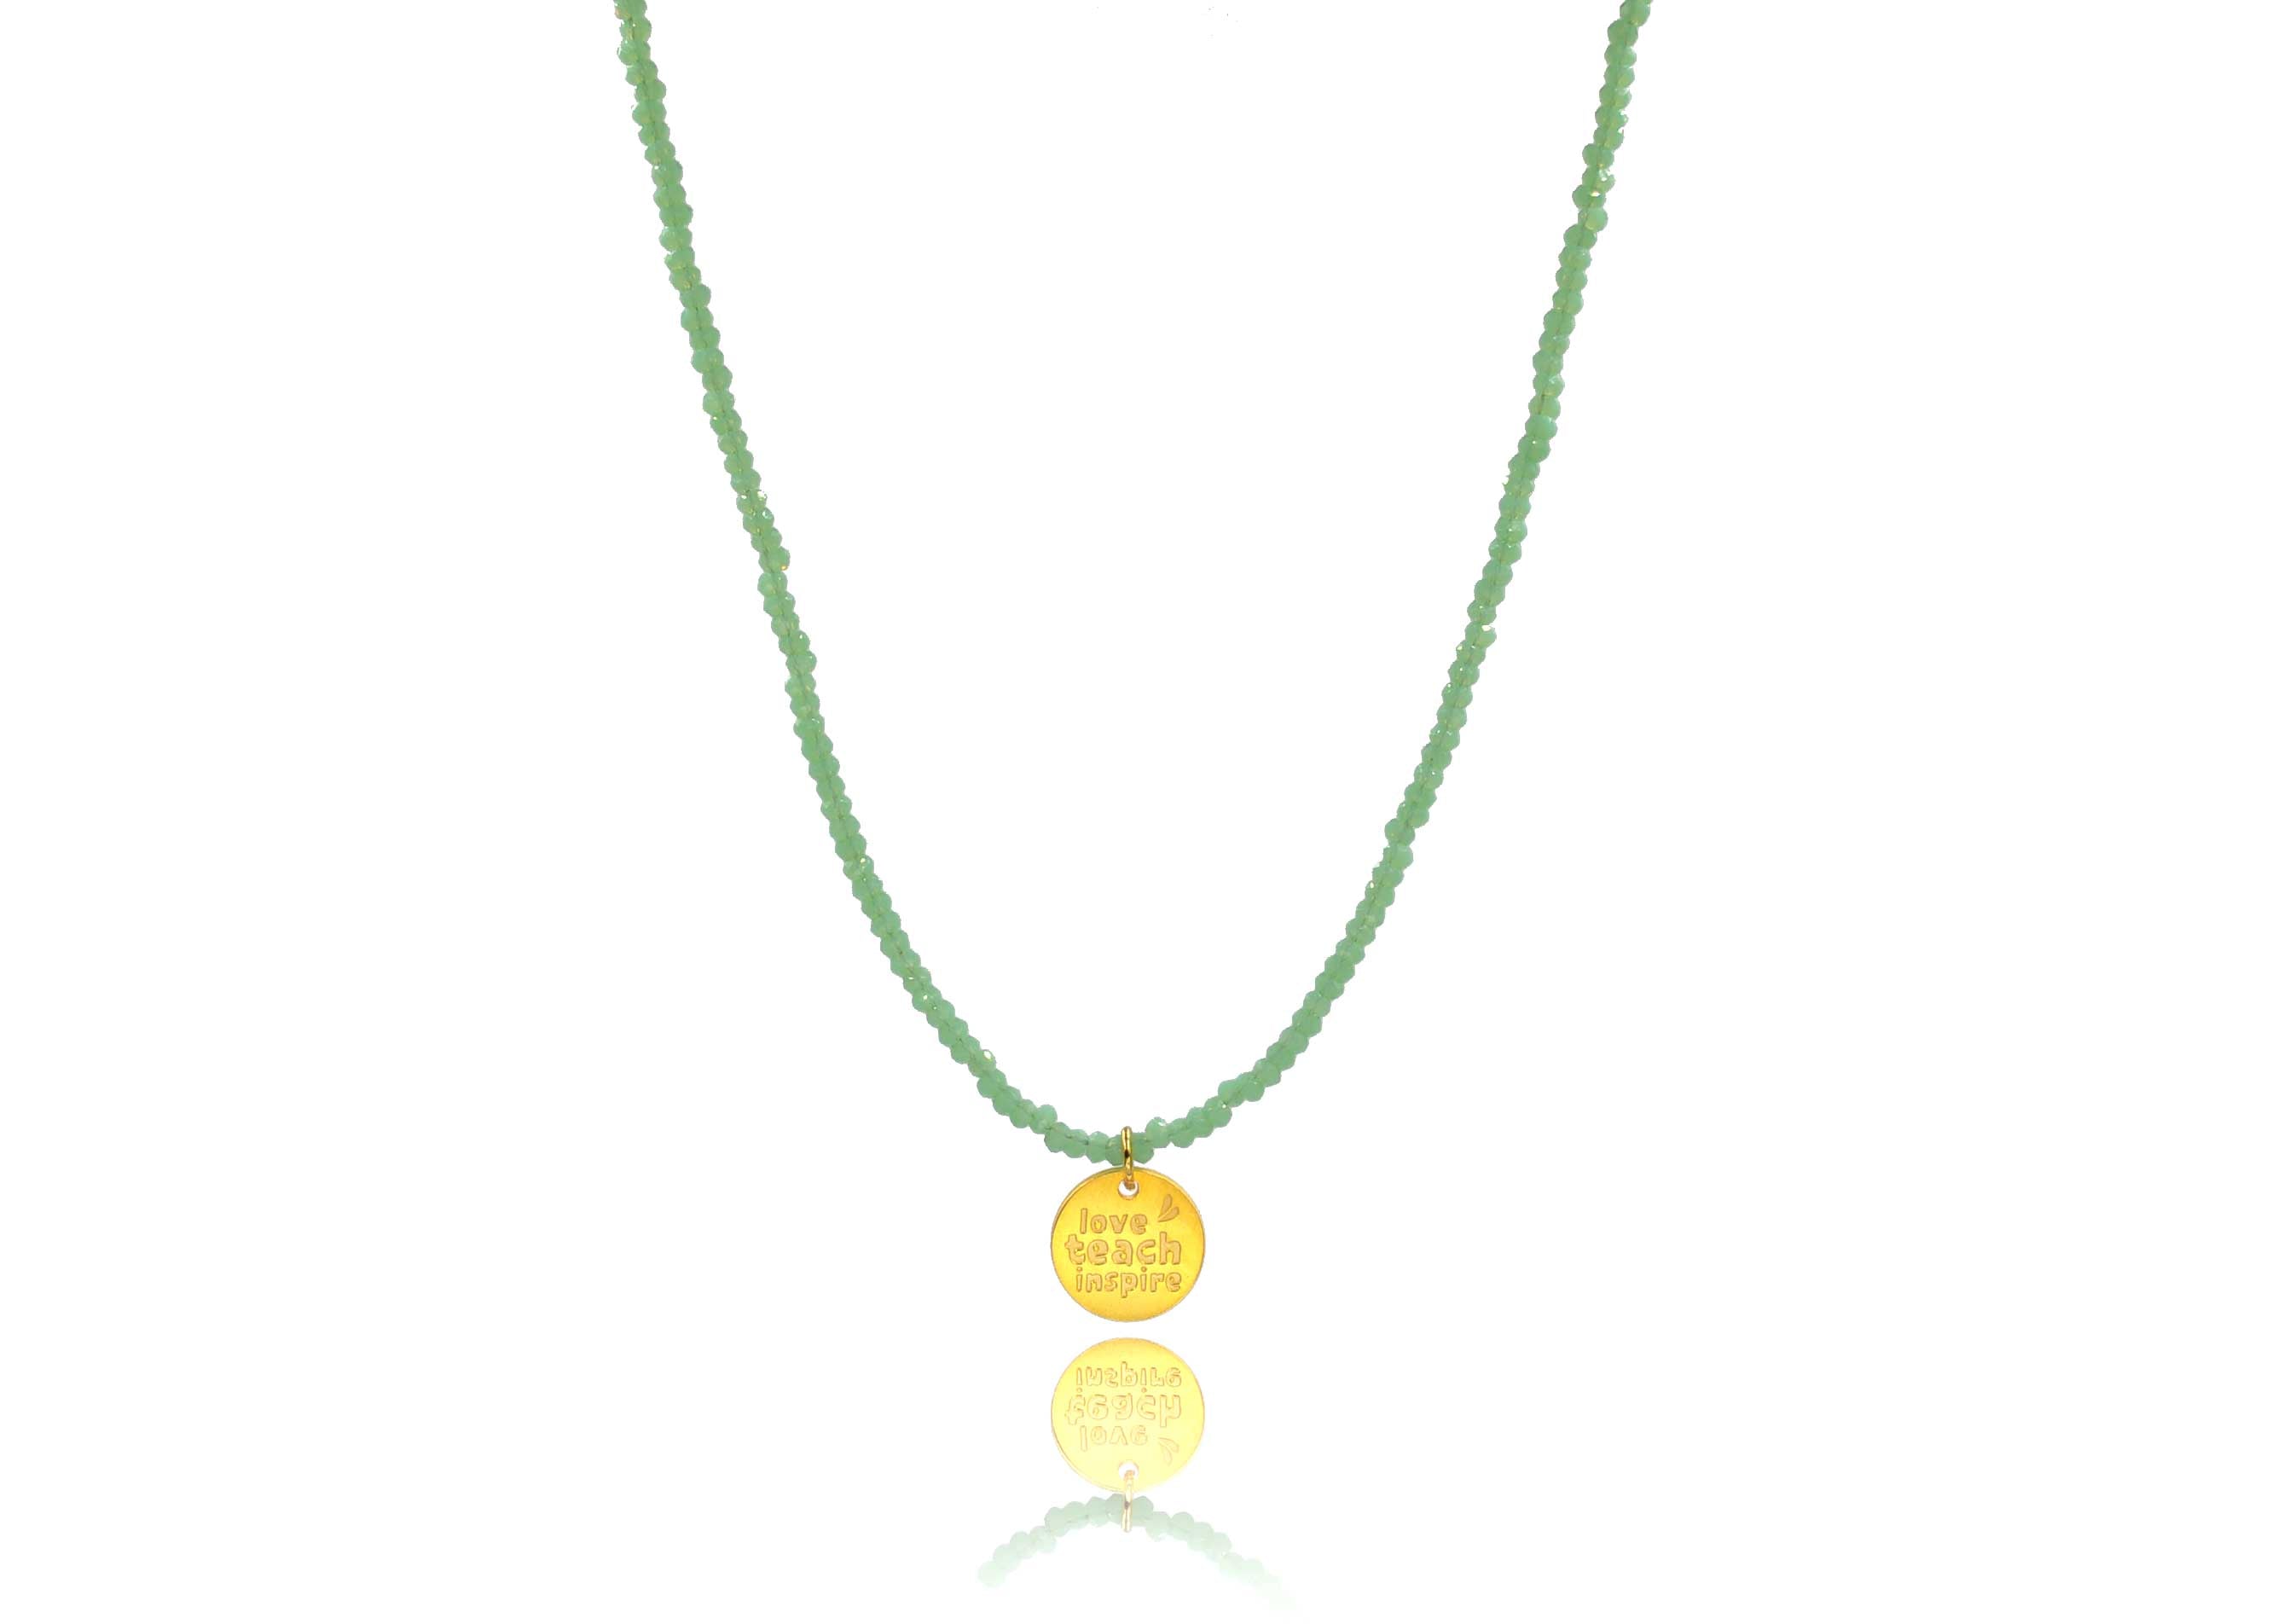 Mint Crystal 'Love, Teach, Inspire' Necklace